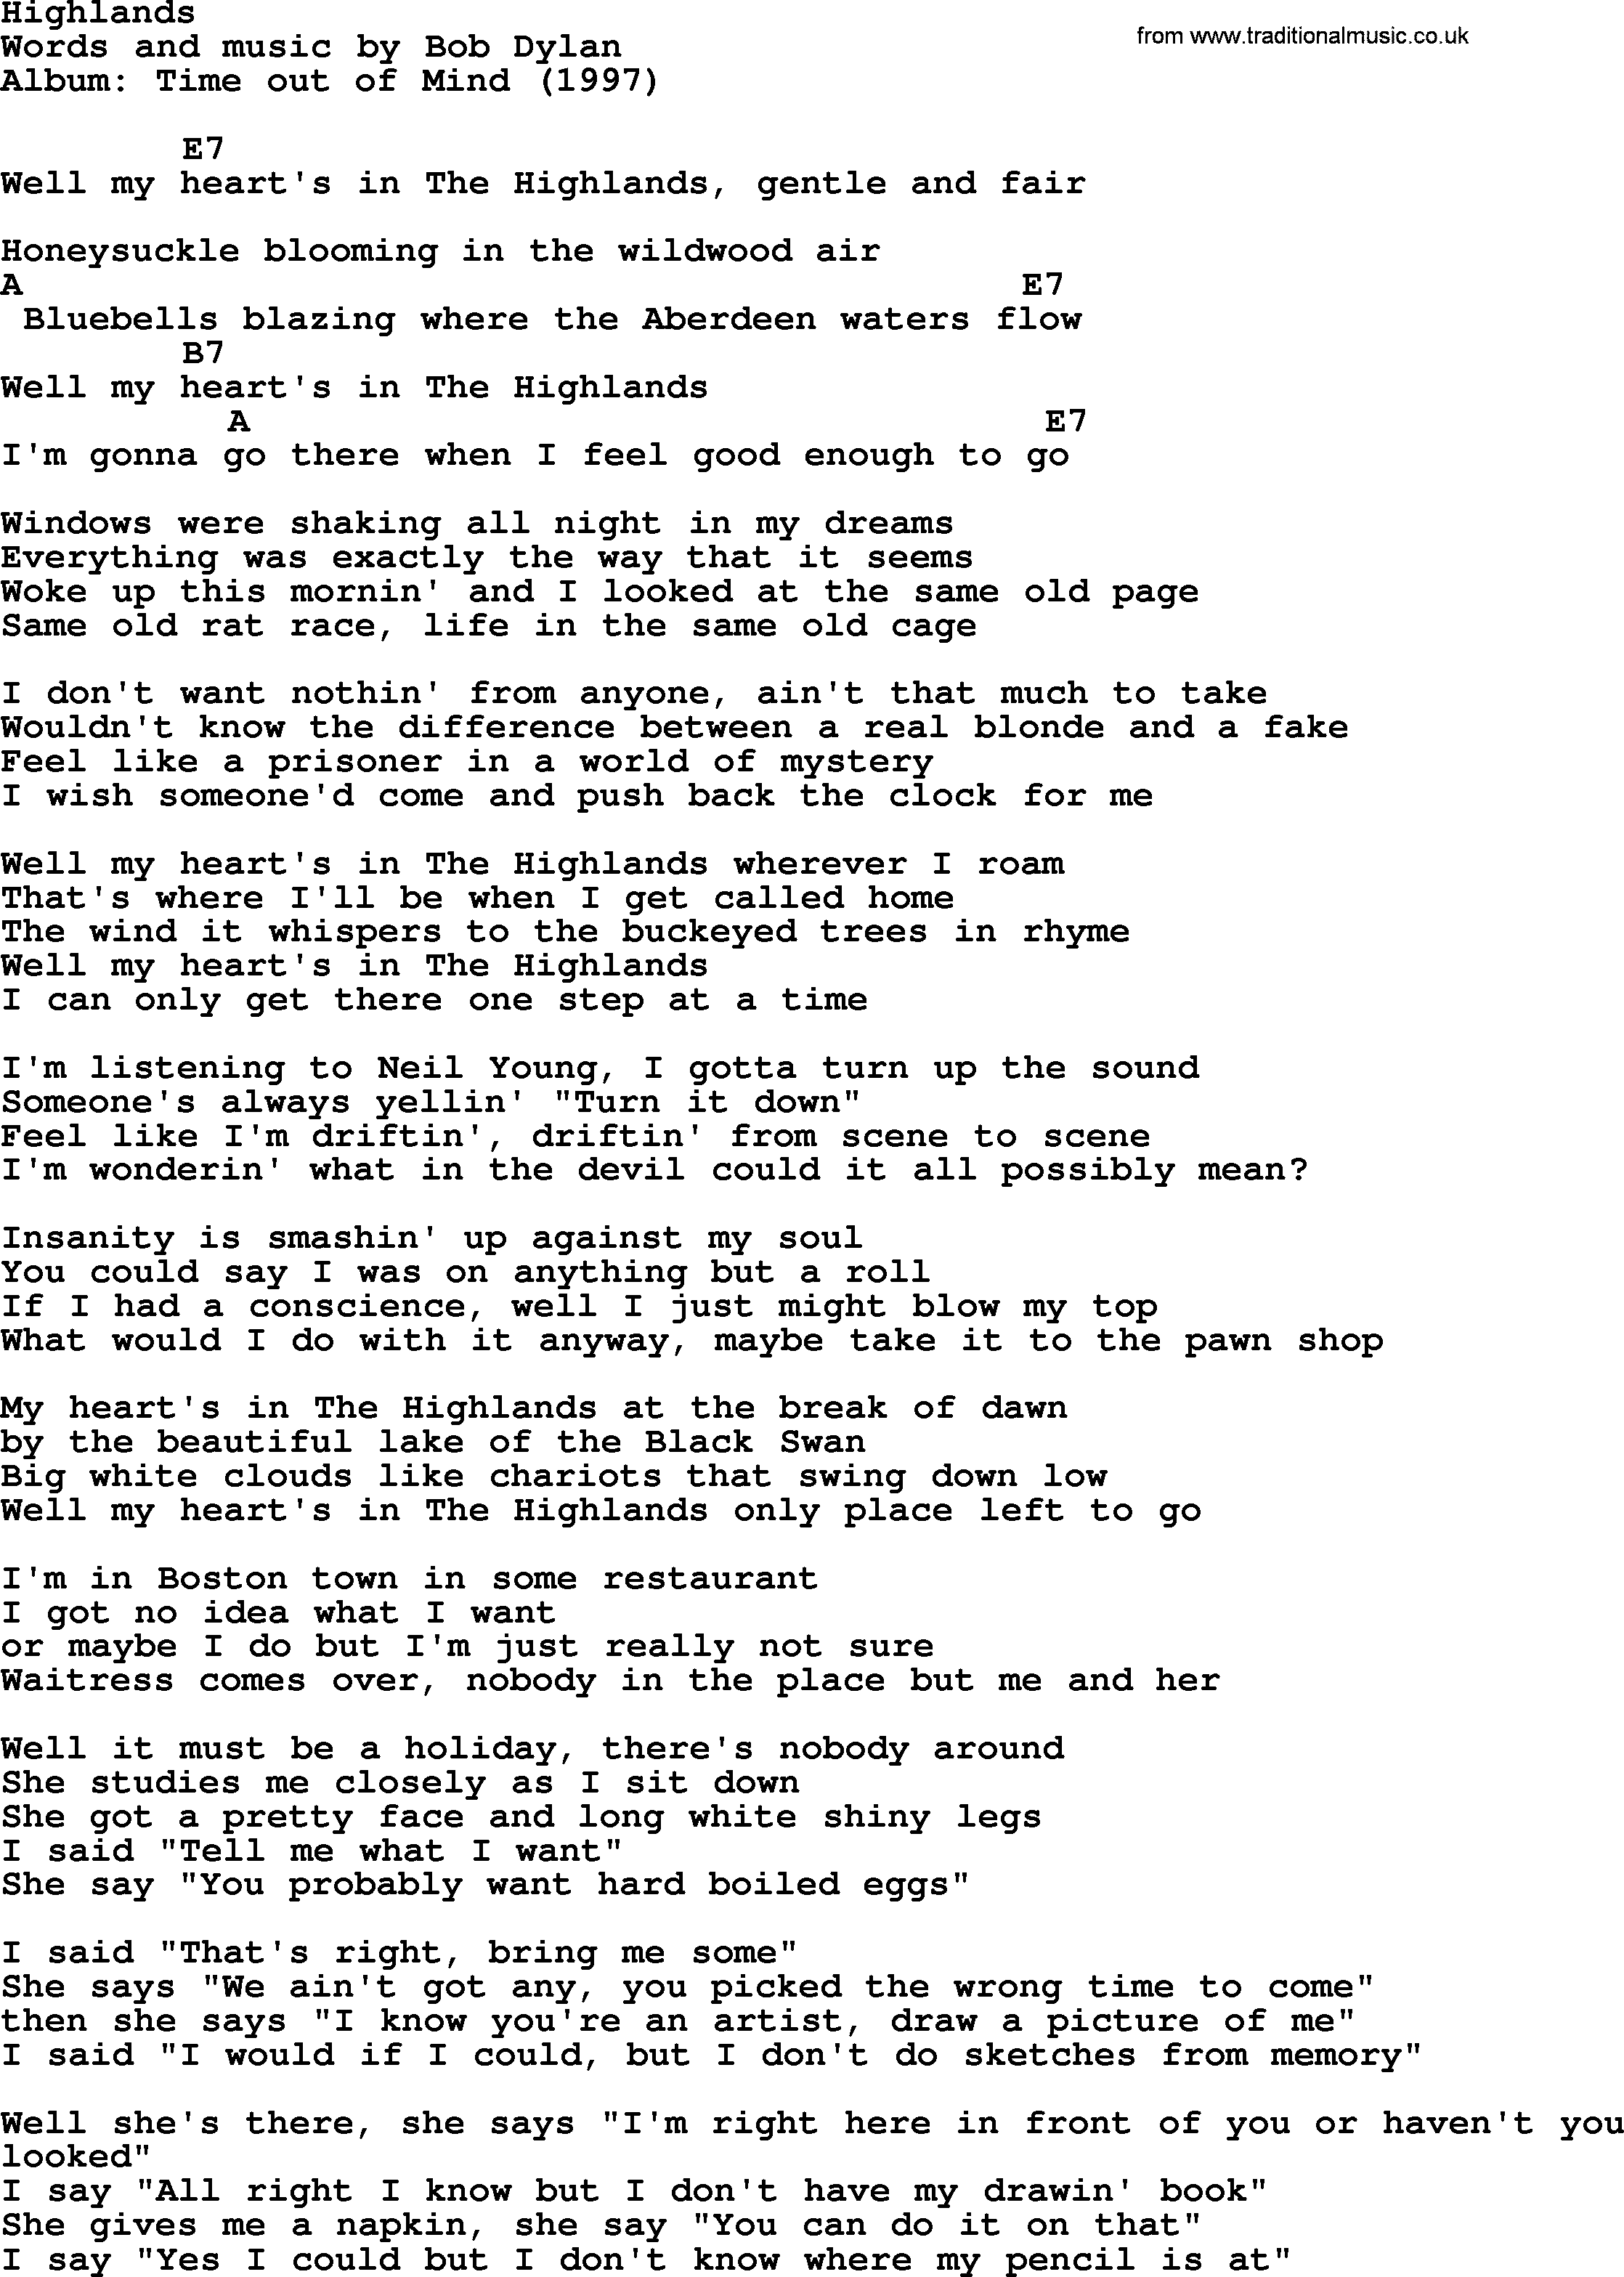 Bob Dylan song, lyrics with chords - Highlands